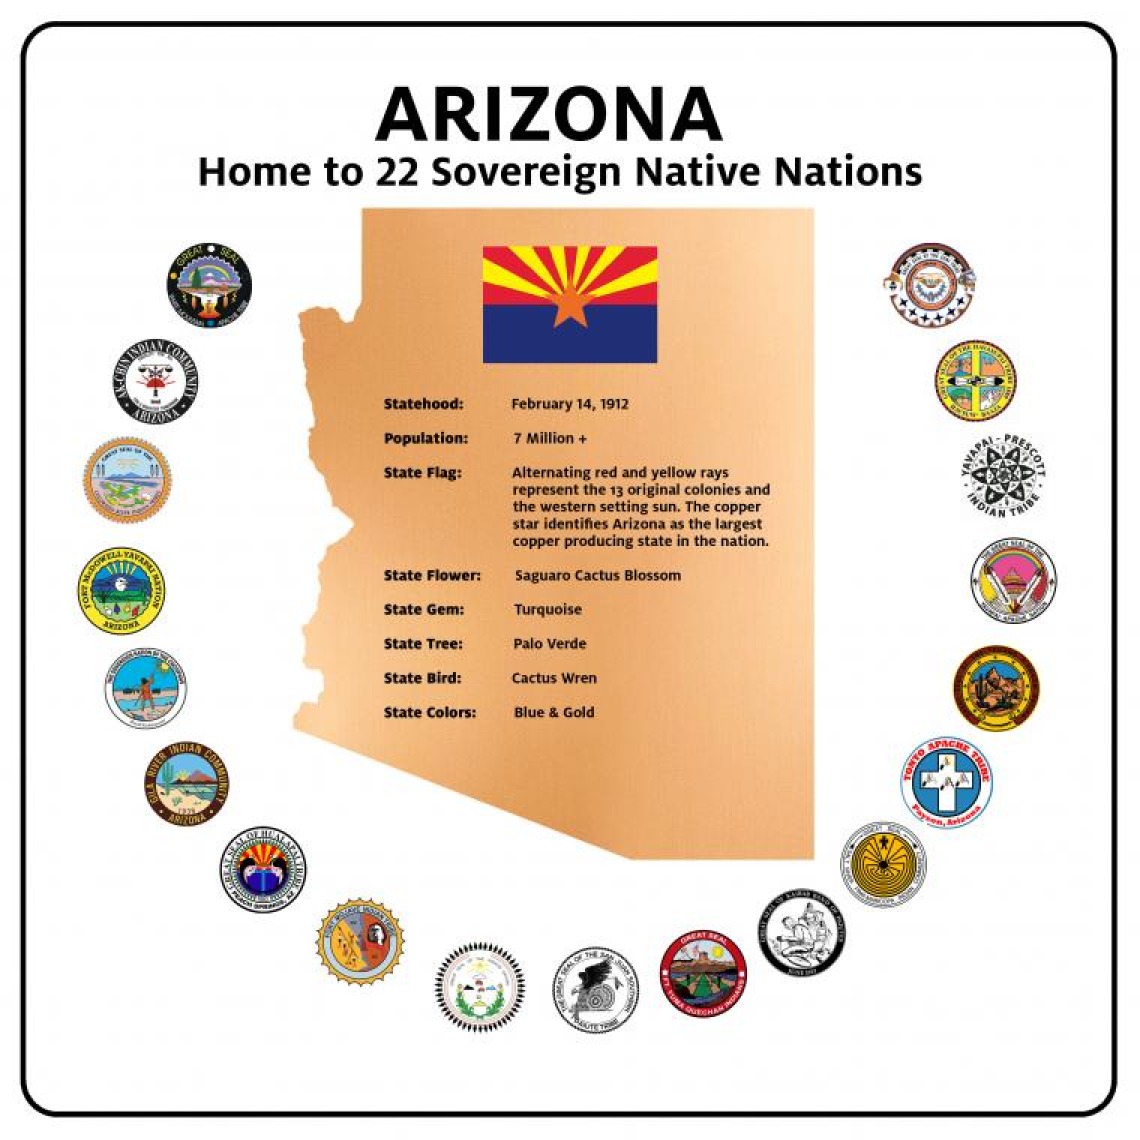 Arizona: Home to 22 Sovereign Native Nations